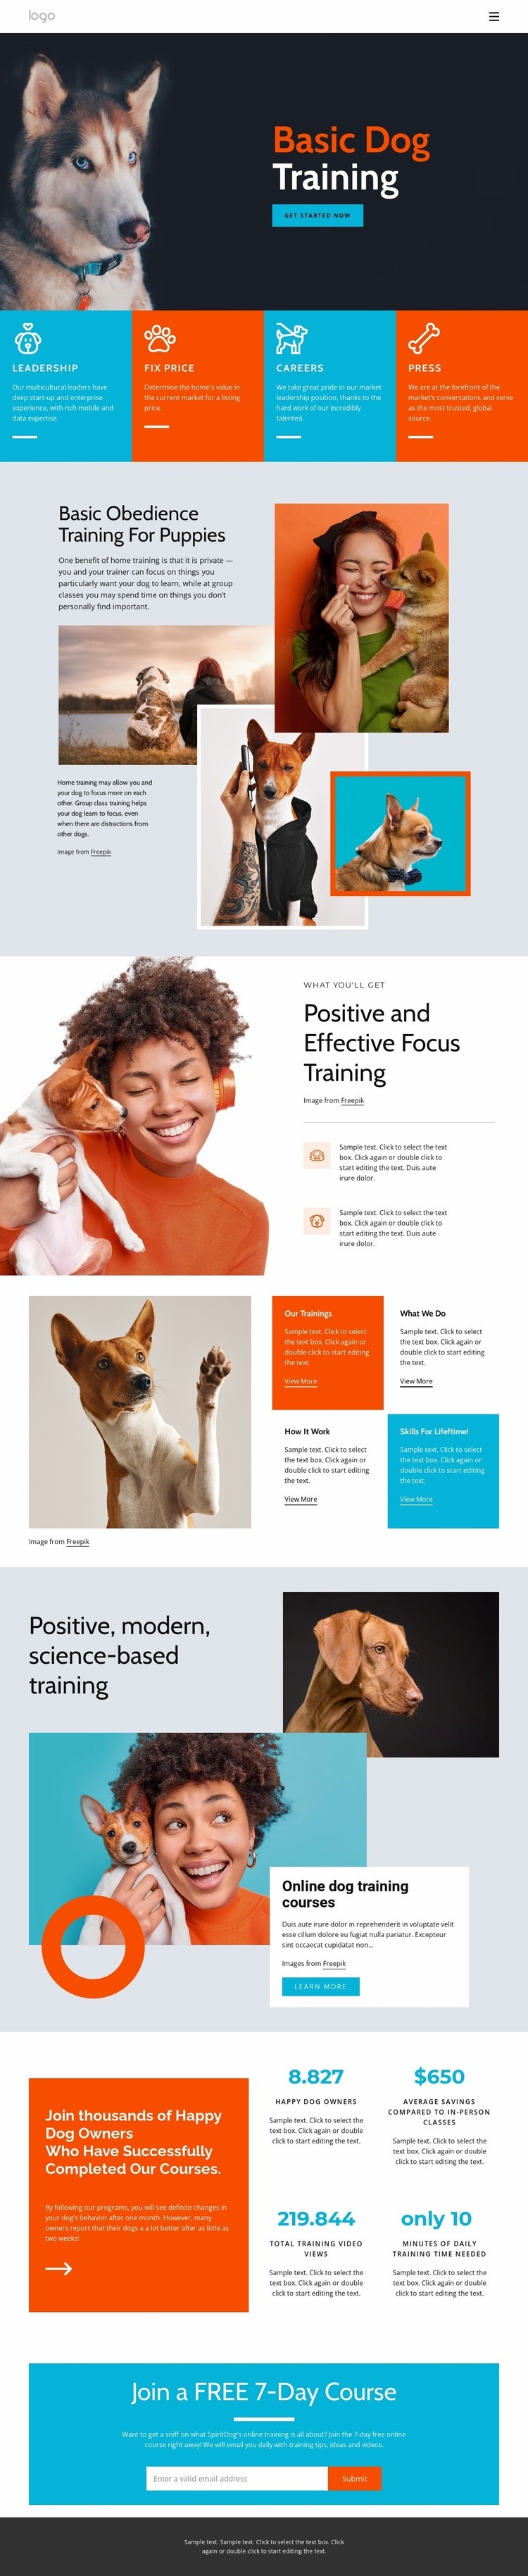 Dog training courses Web Page Design